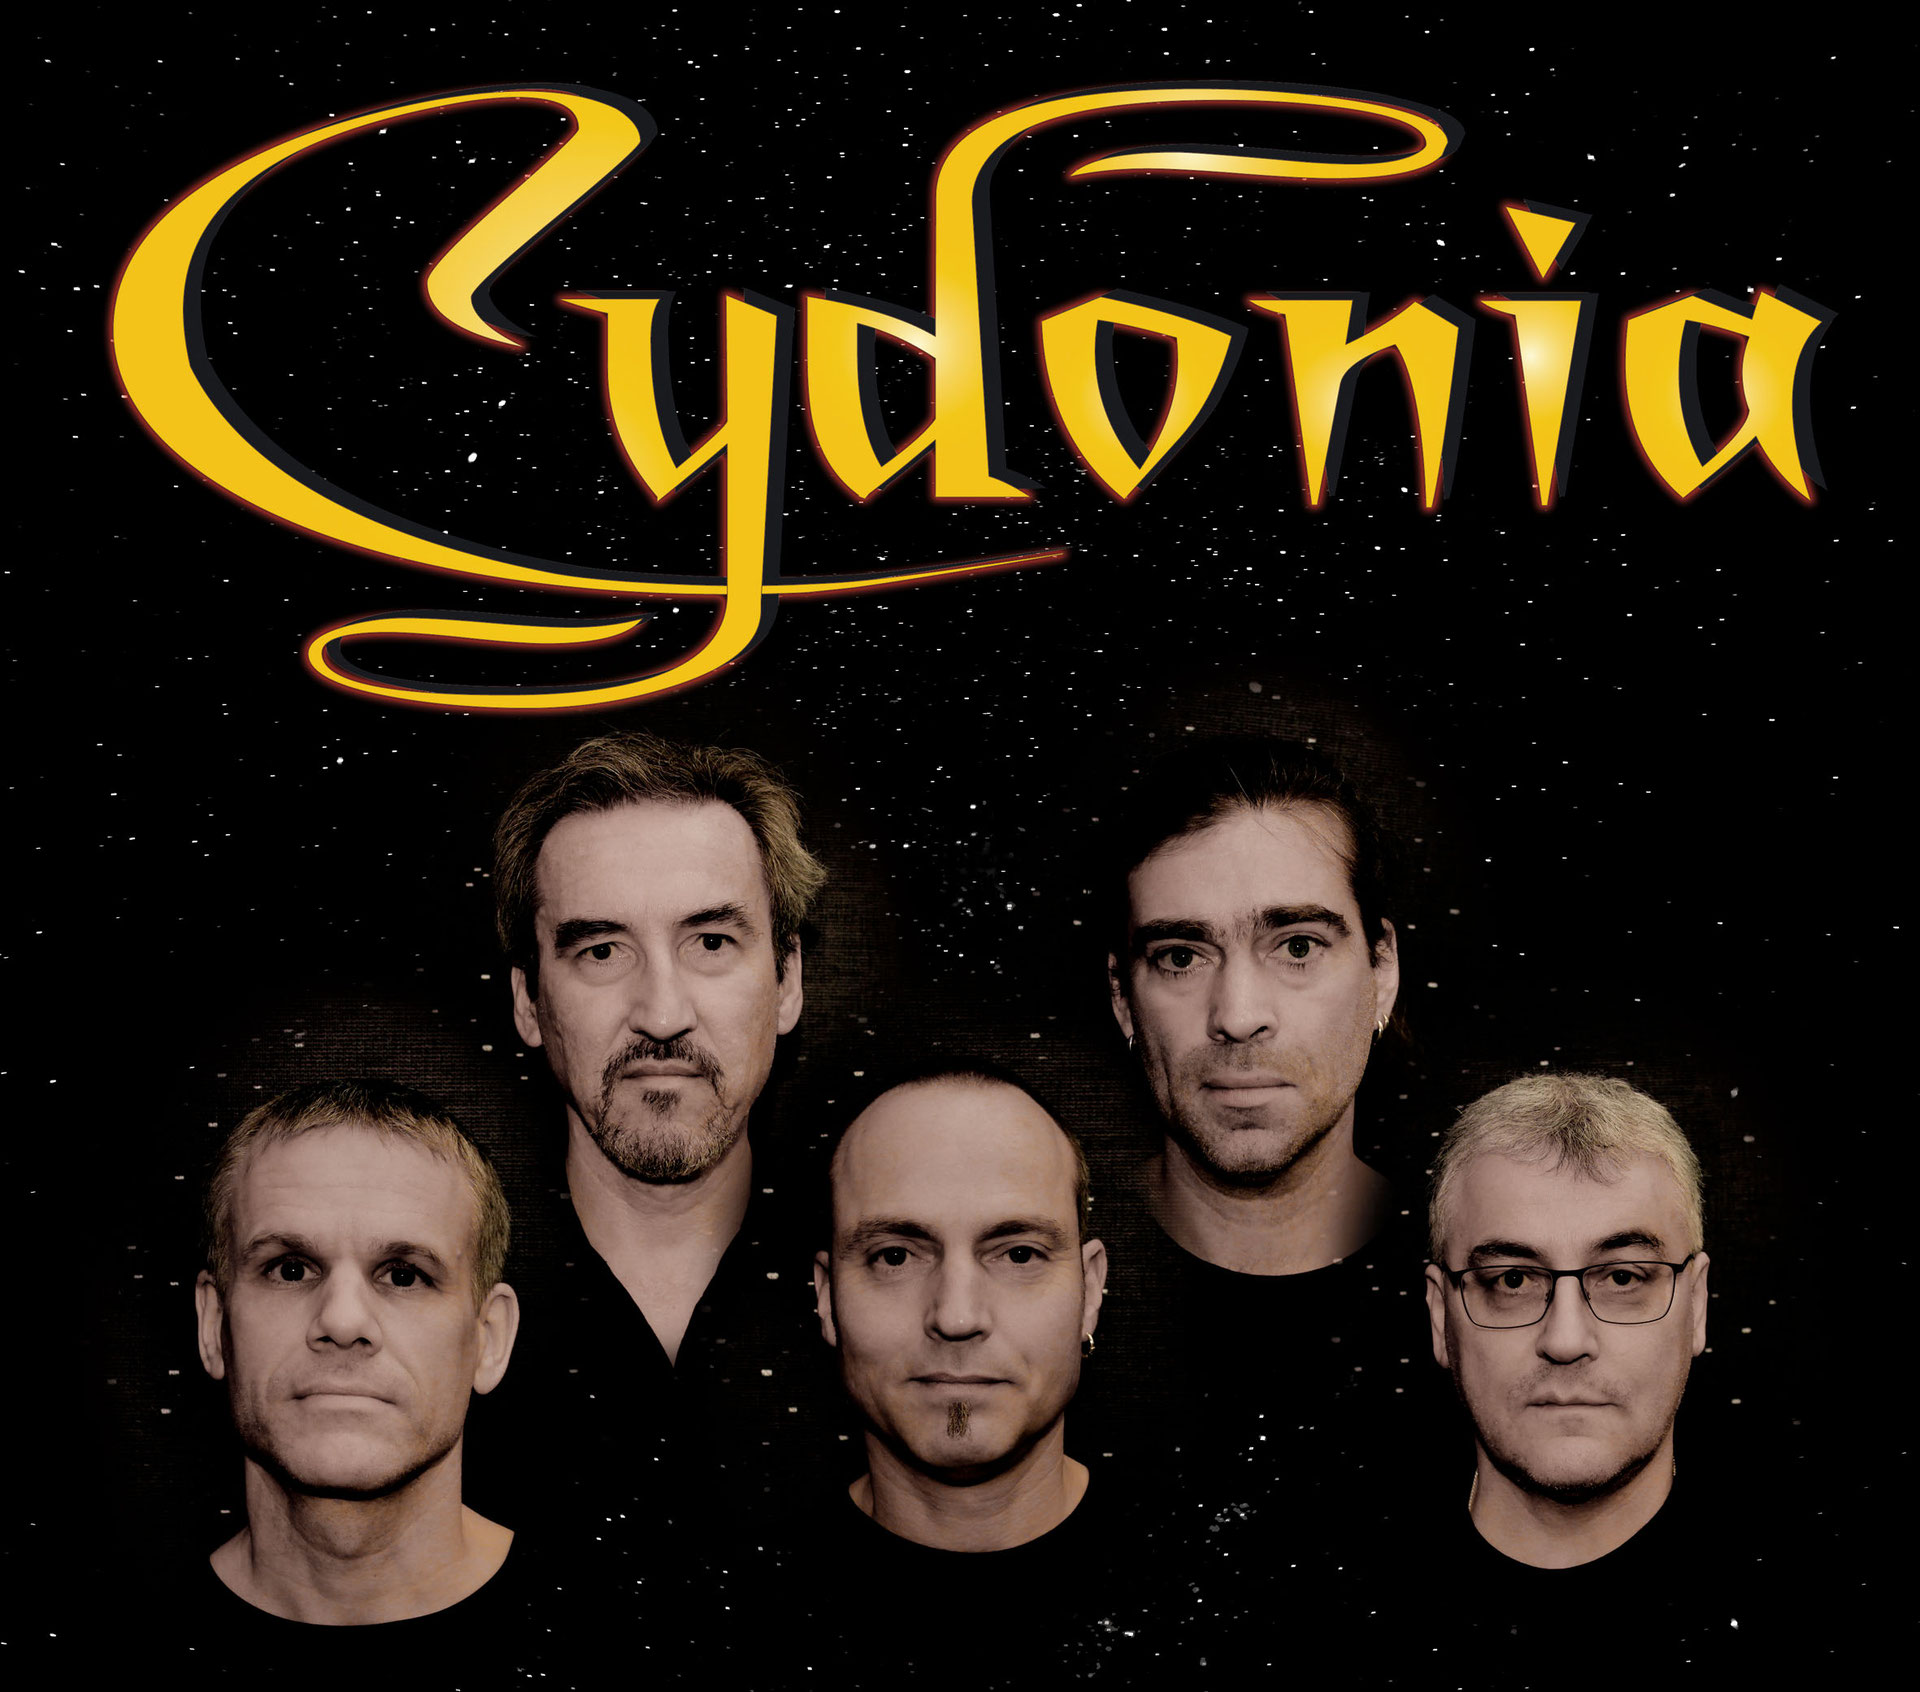 www.cydonia.band